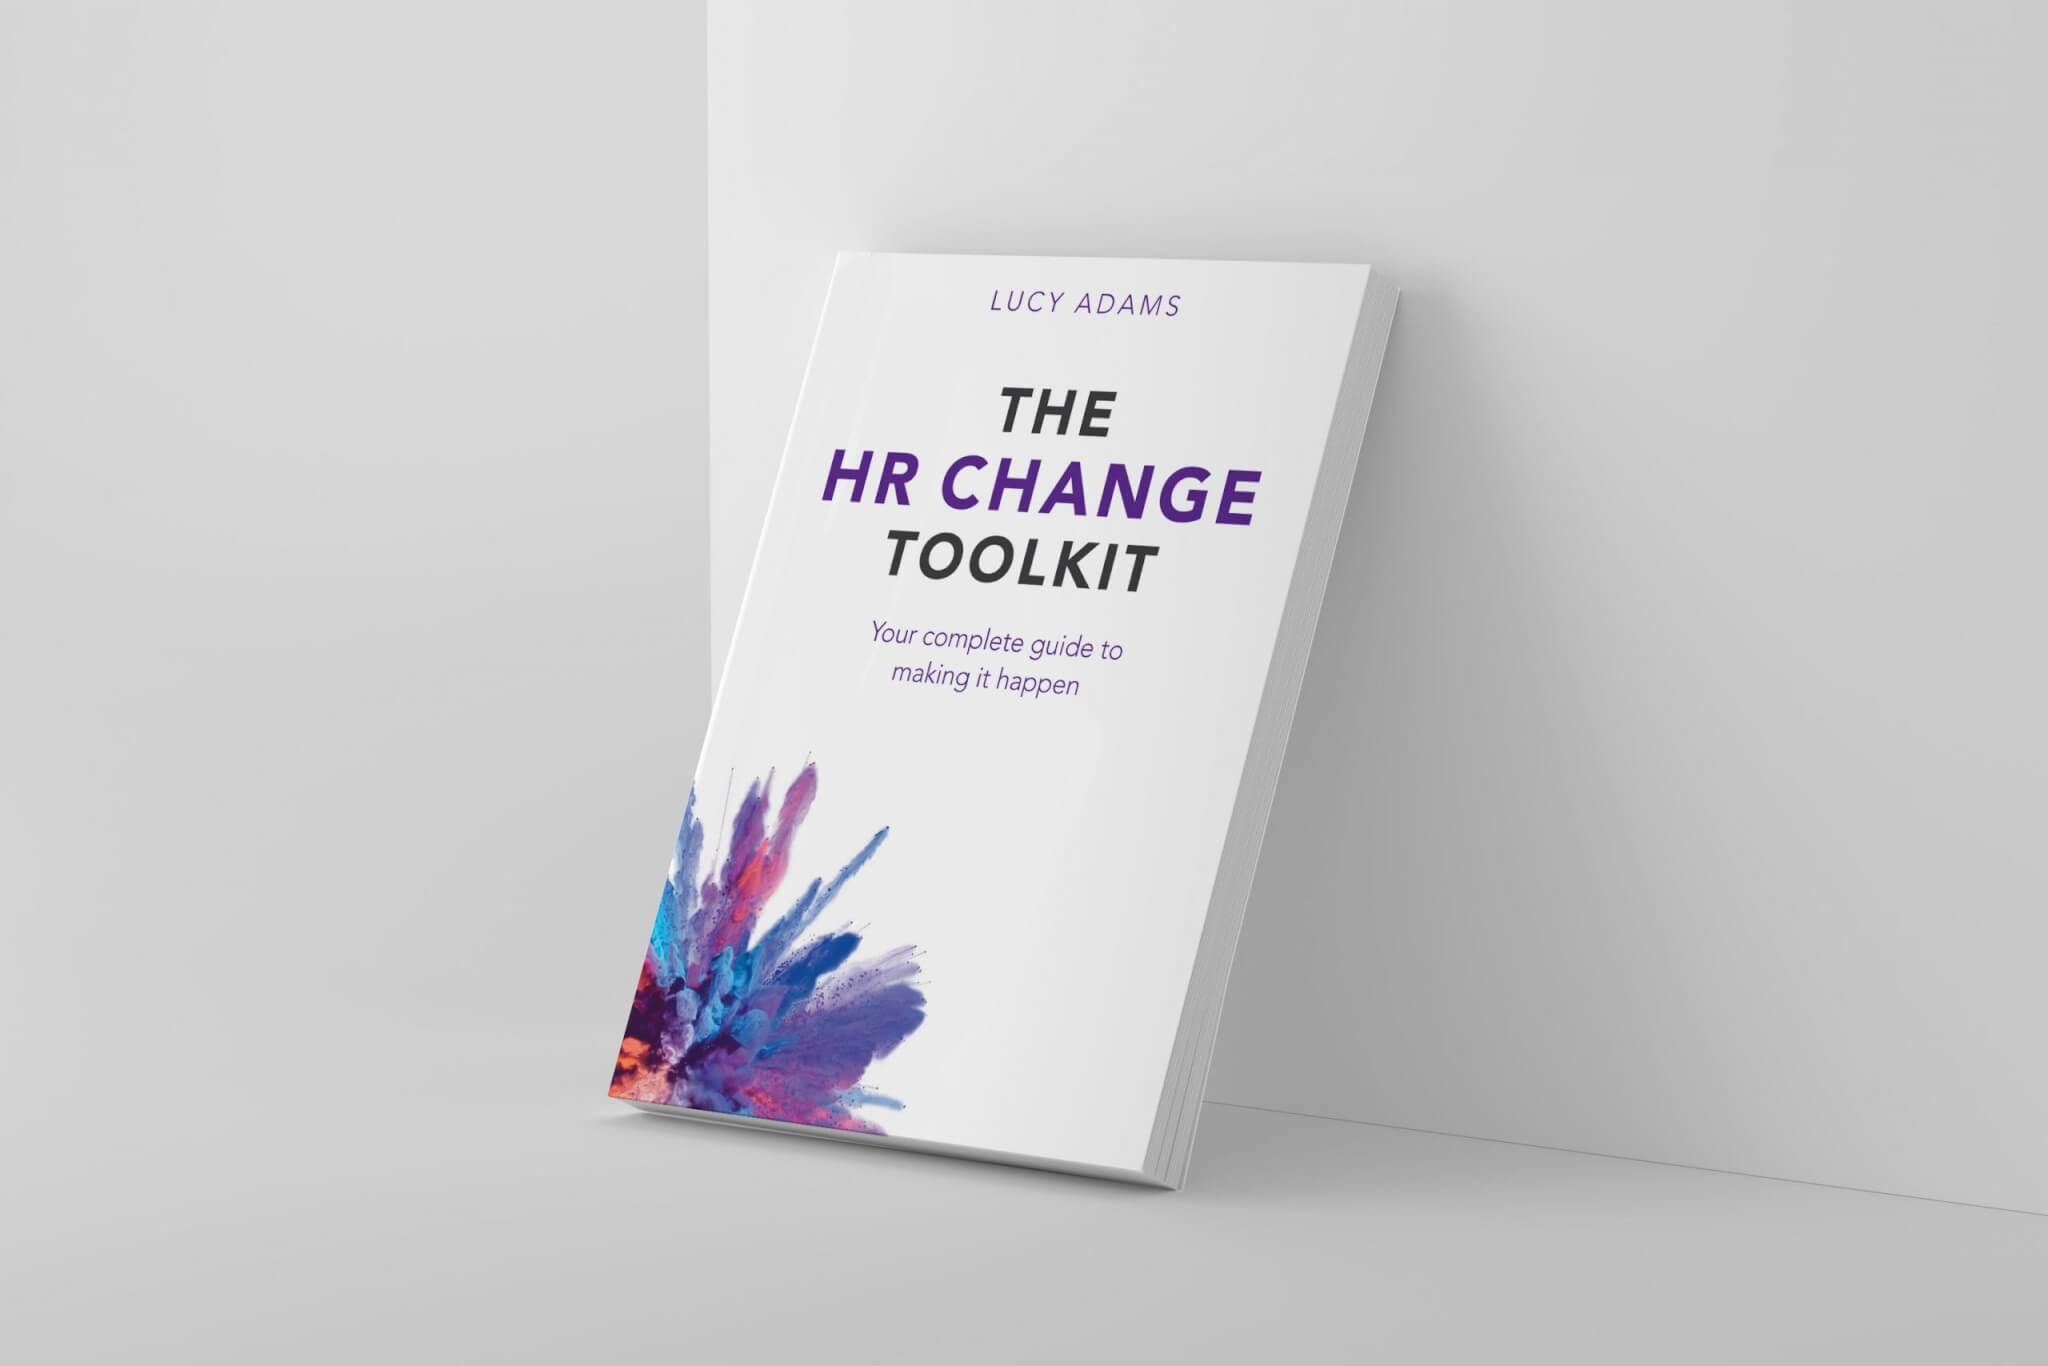 HR Change Toolkit